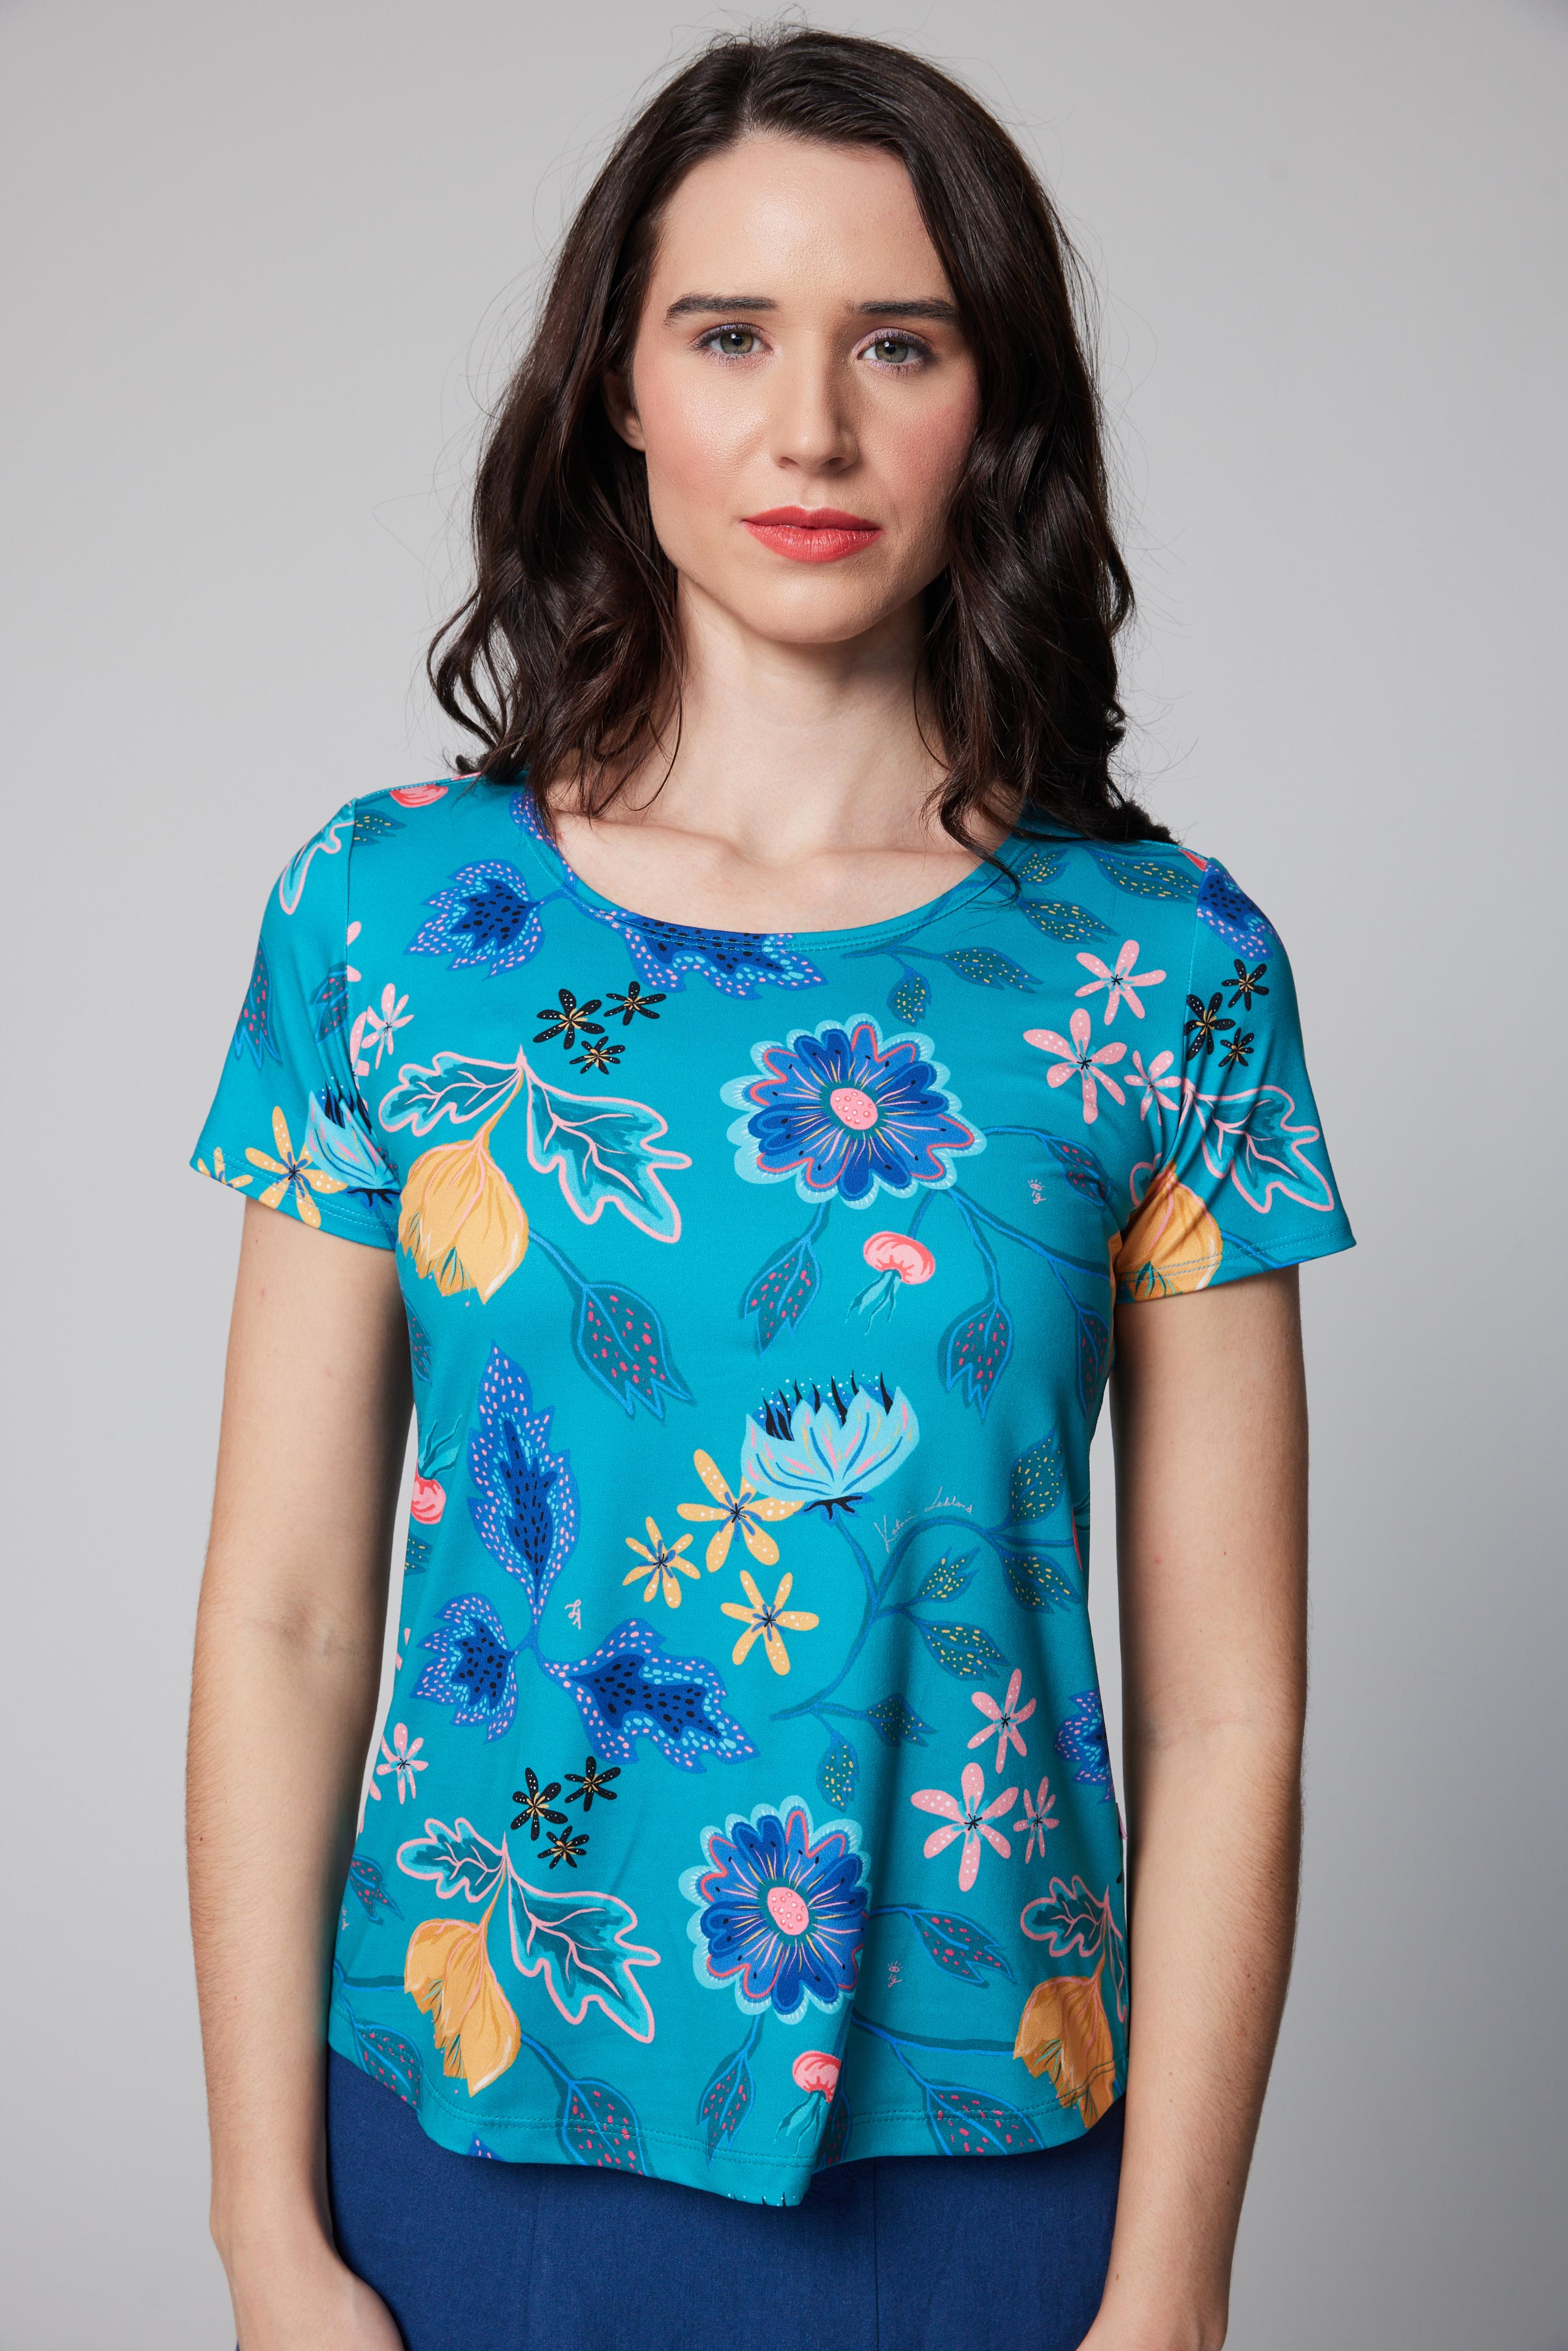 Scoop Neck T-shirt - Rosehip Turquoise